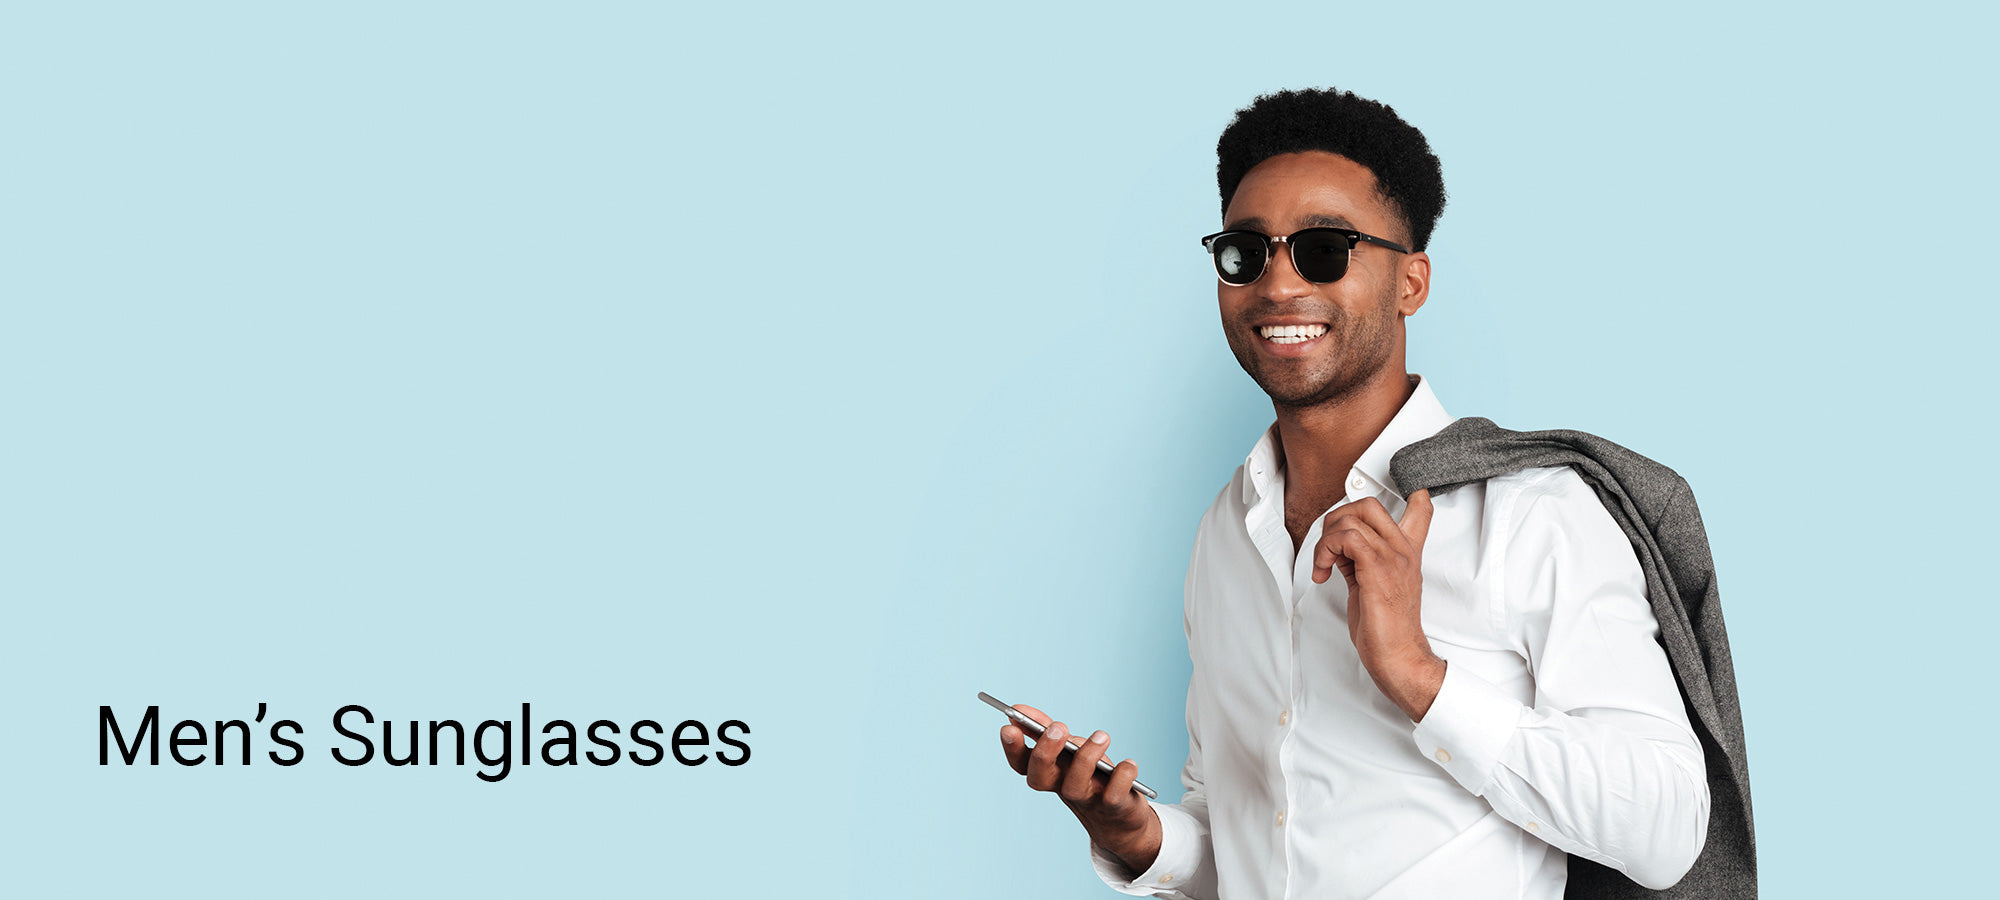 Men's Sunglasses – Optical London Drugs.com